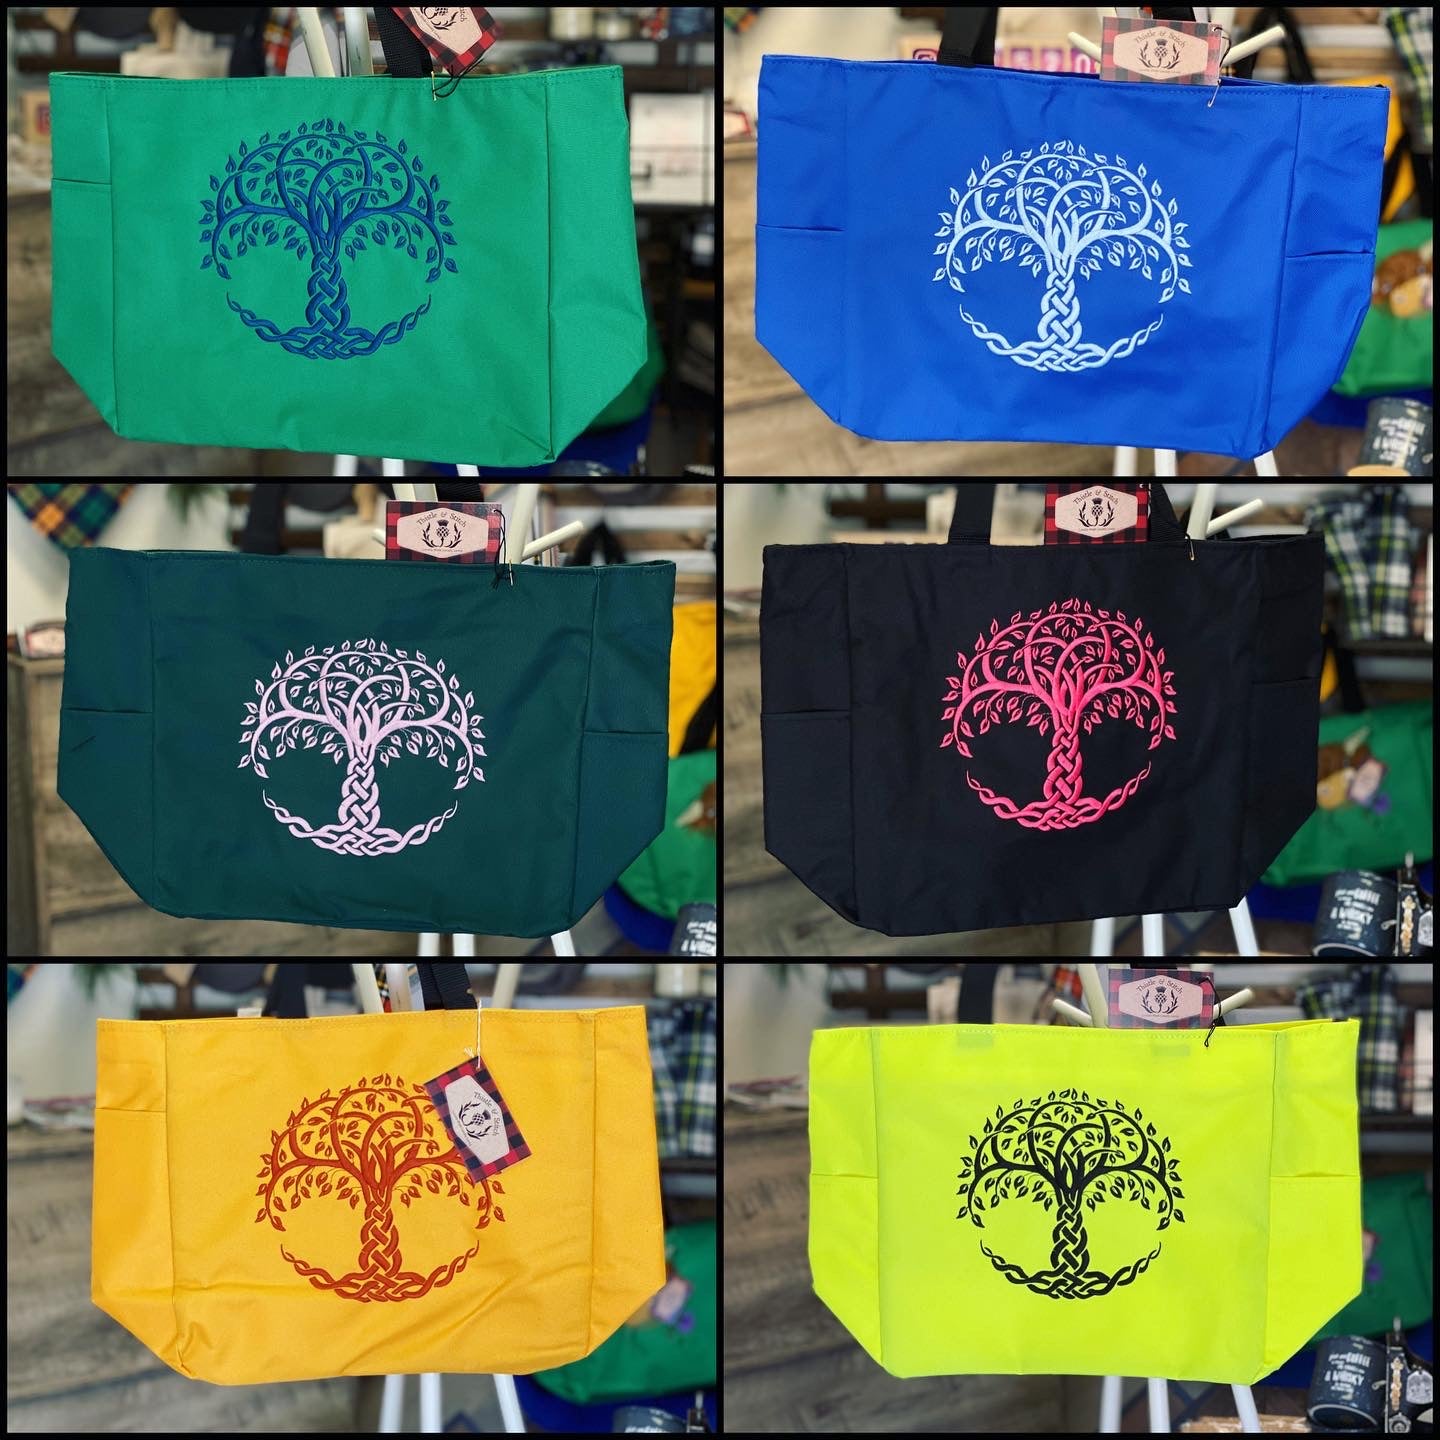 CELTIC TREE OF LIFE MANDALA Celtic artPATCH Canvas Resort Tote bag